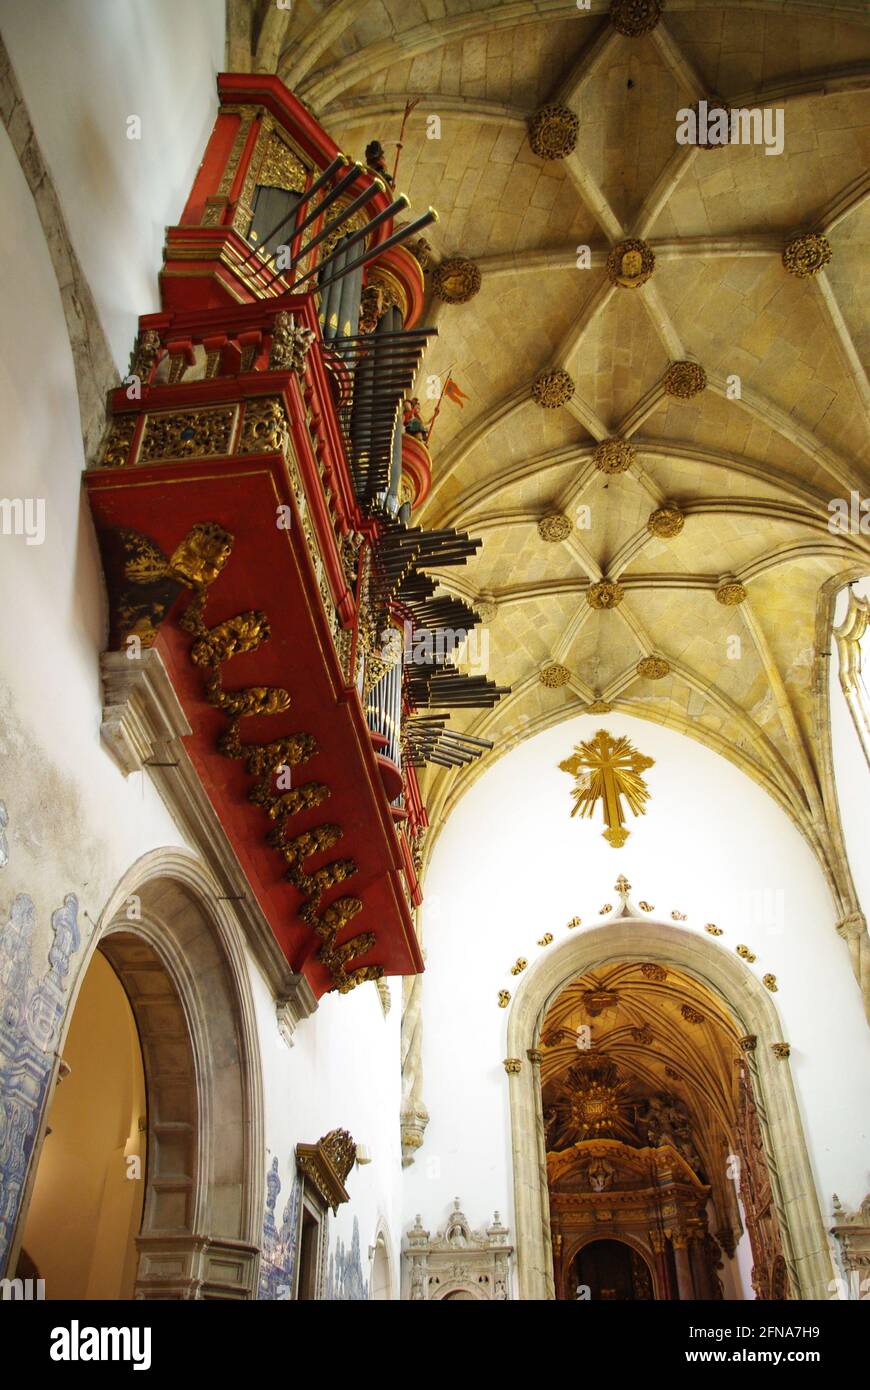 Beautiful 18th century Baroque pipe organ and the vaulted ceiling, Santa Cruz Monastery, Coimbra, Portugal Stock Photo